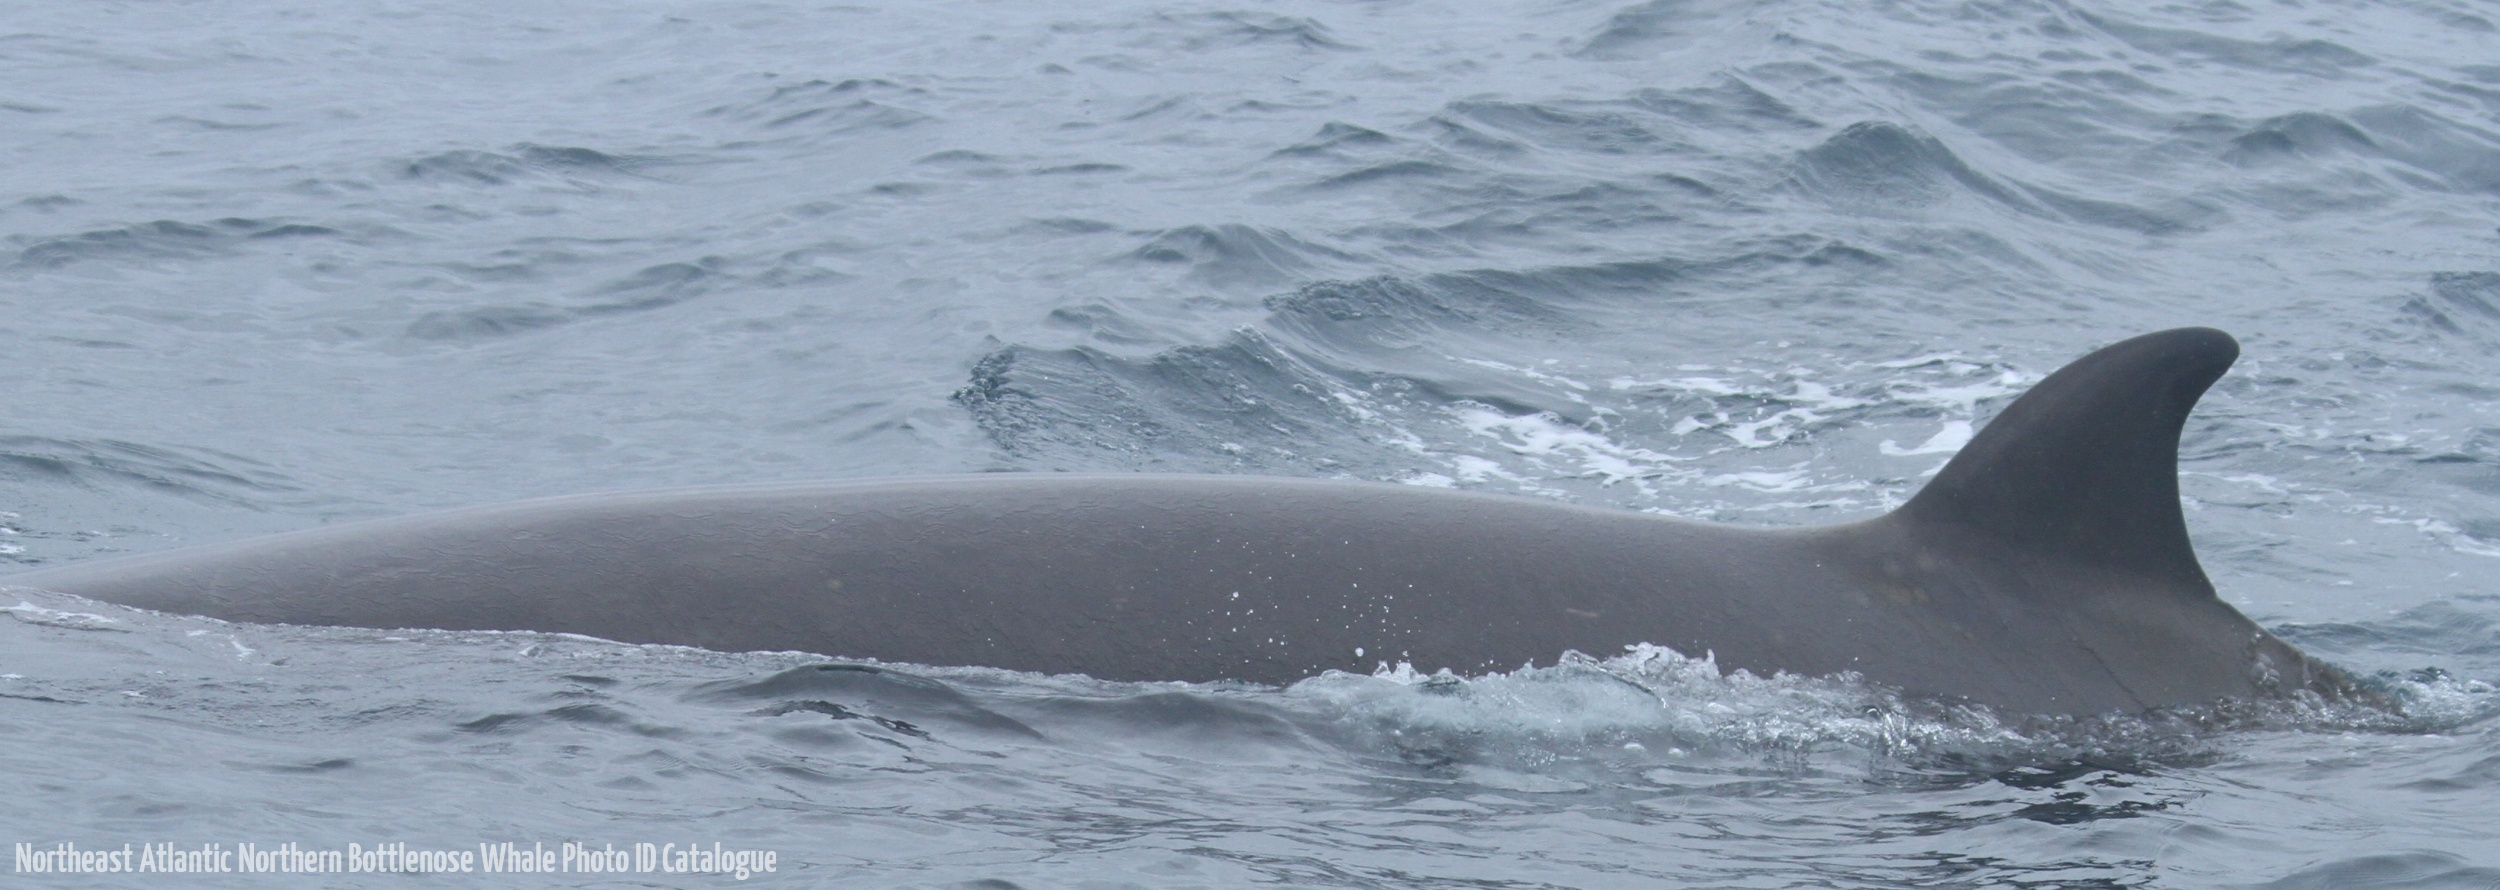 Whale ID: 0020,  Date taken: 03-07-2013,  Photographer: Paul H. Ensor